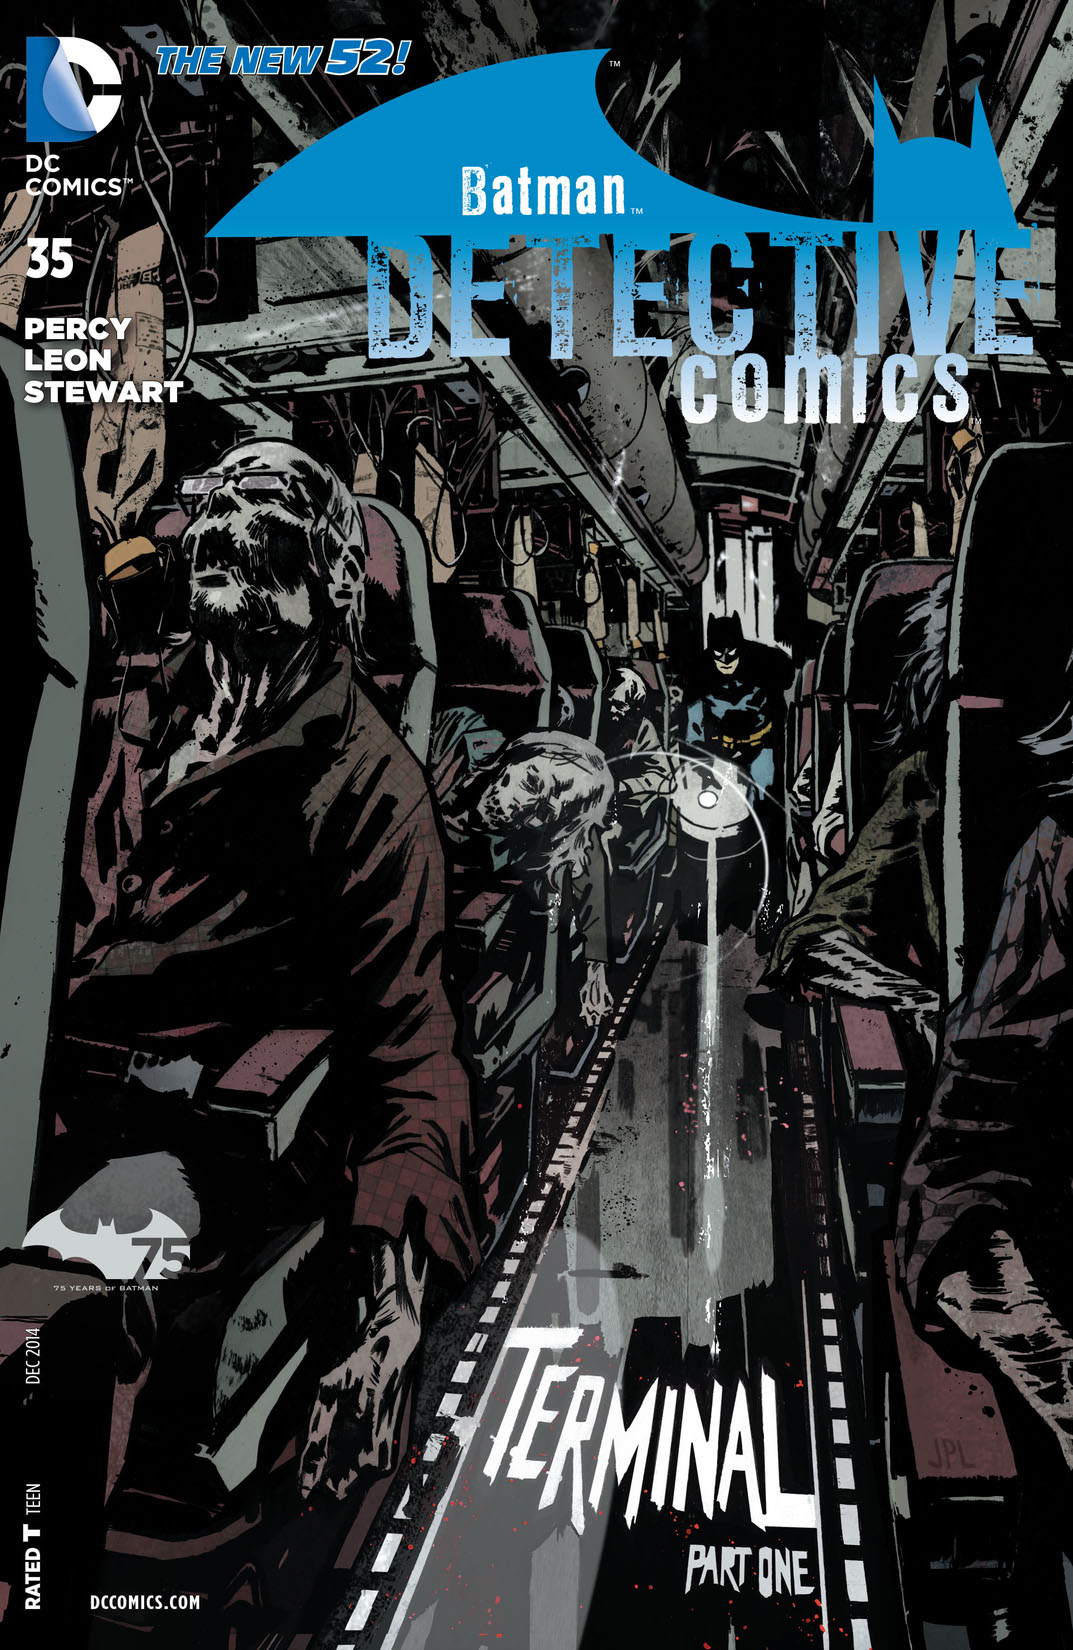 Detective Comics (2011-) #35 preview images